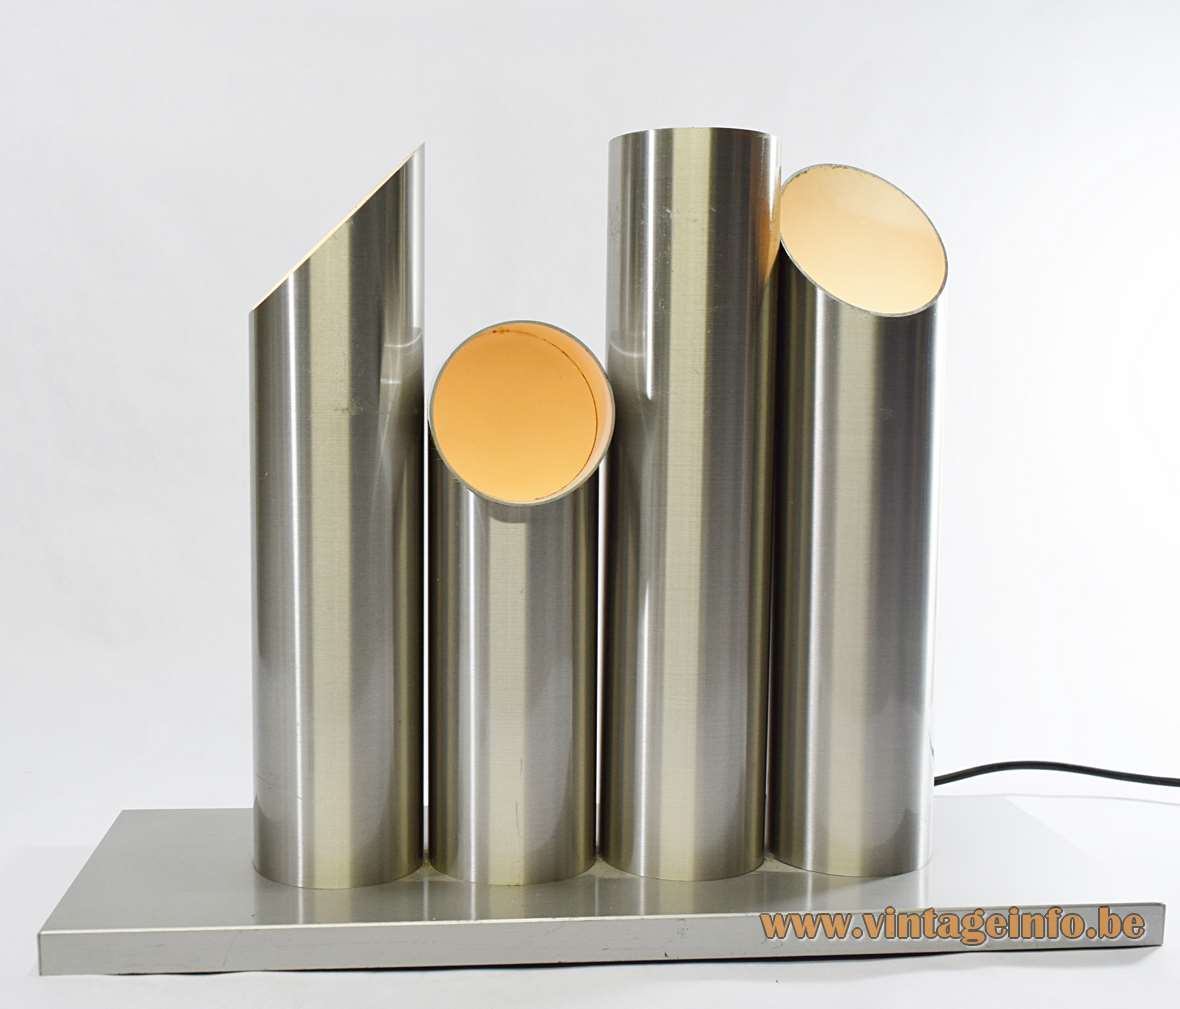 Raak Lichtsculptuur table lamp 4 brushed aluminium tubes design: Maurice Grothausen 1960s 1970s vintage E27 sockets